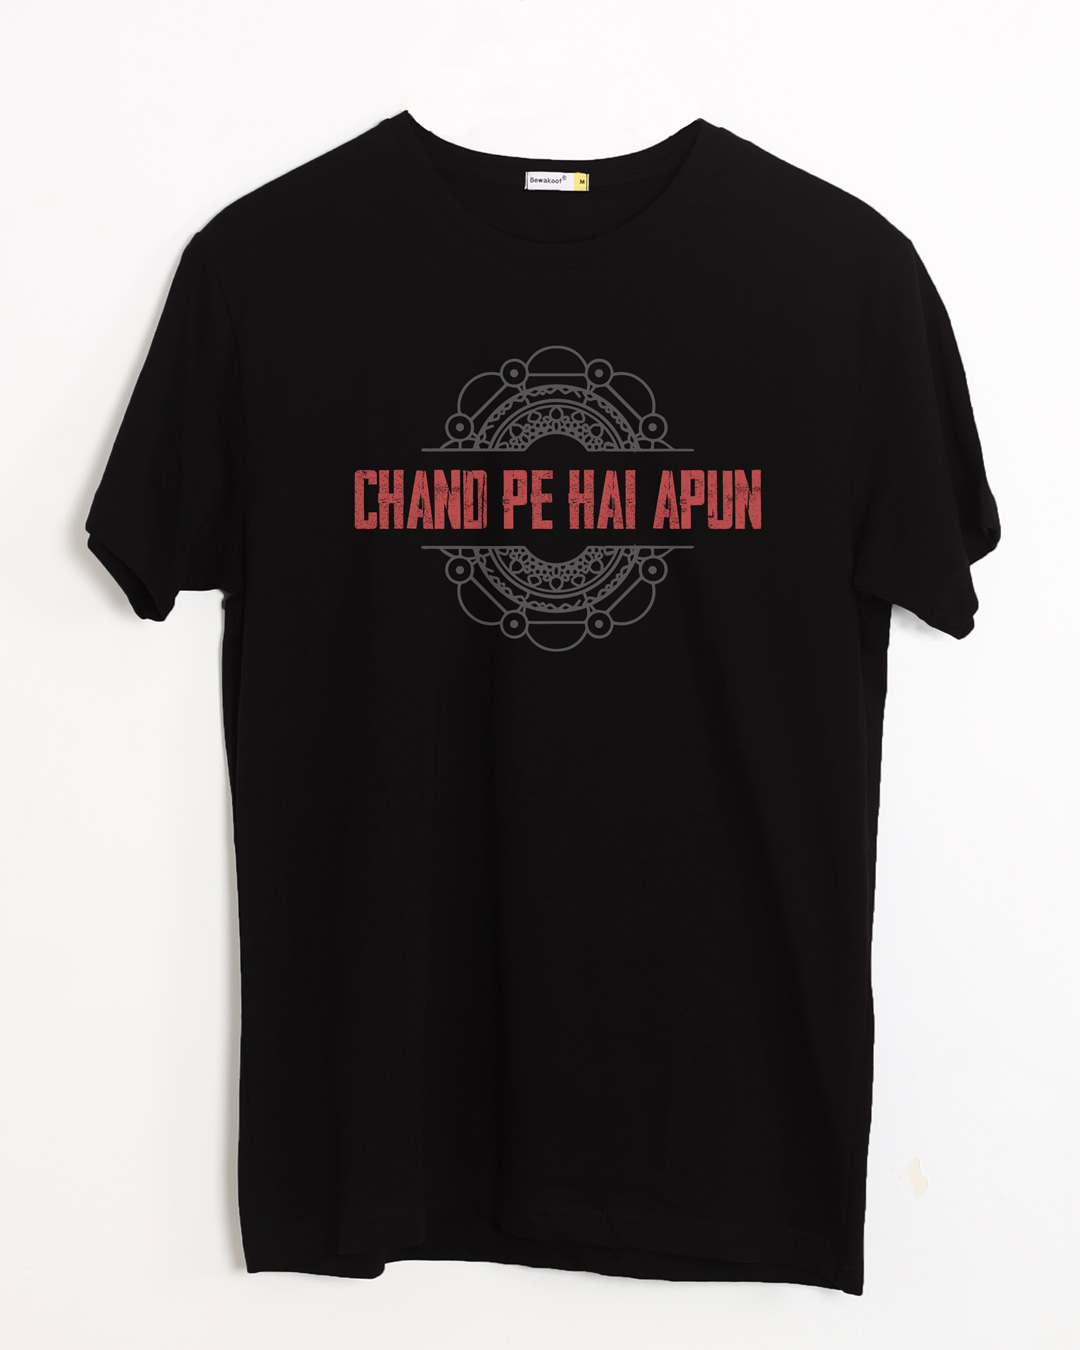 Buy Chand pe hai apun Printed Half Sleeve T-Shirt For Men Online India ...